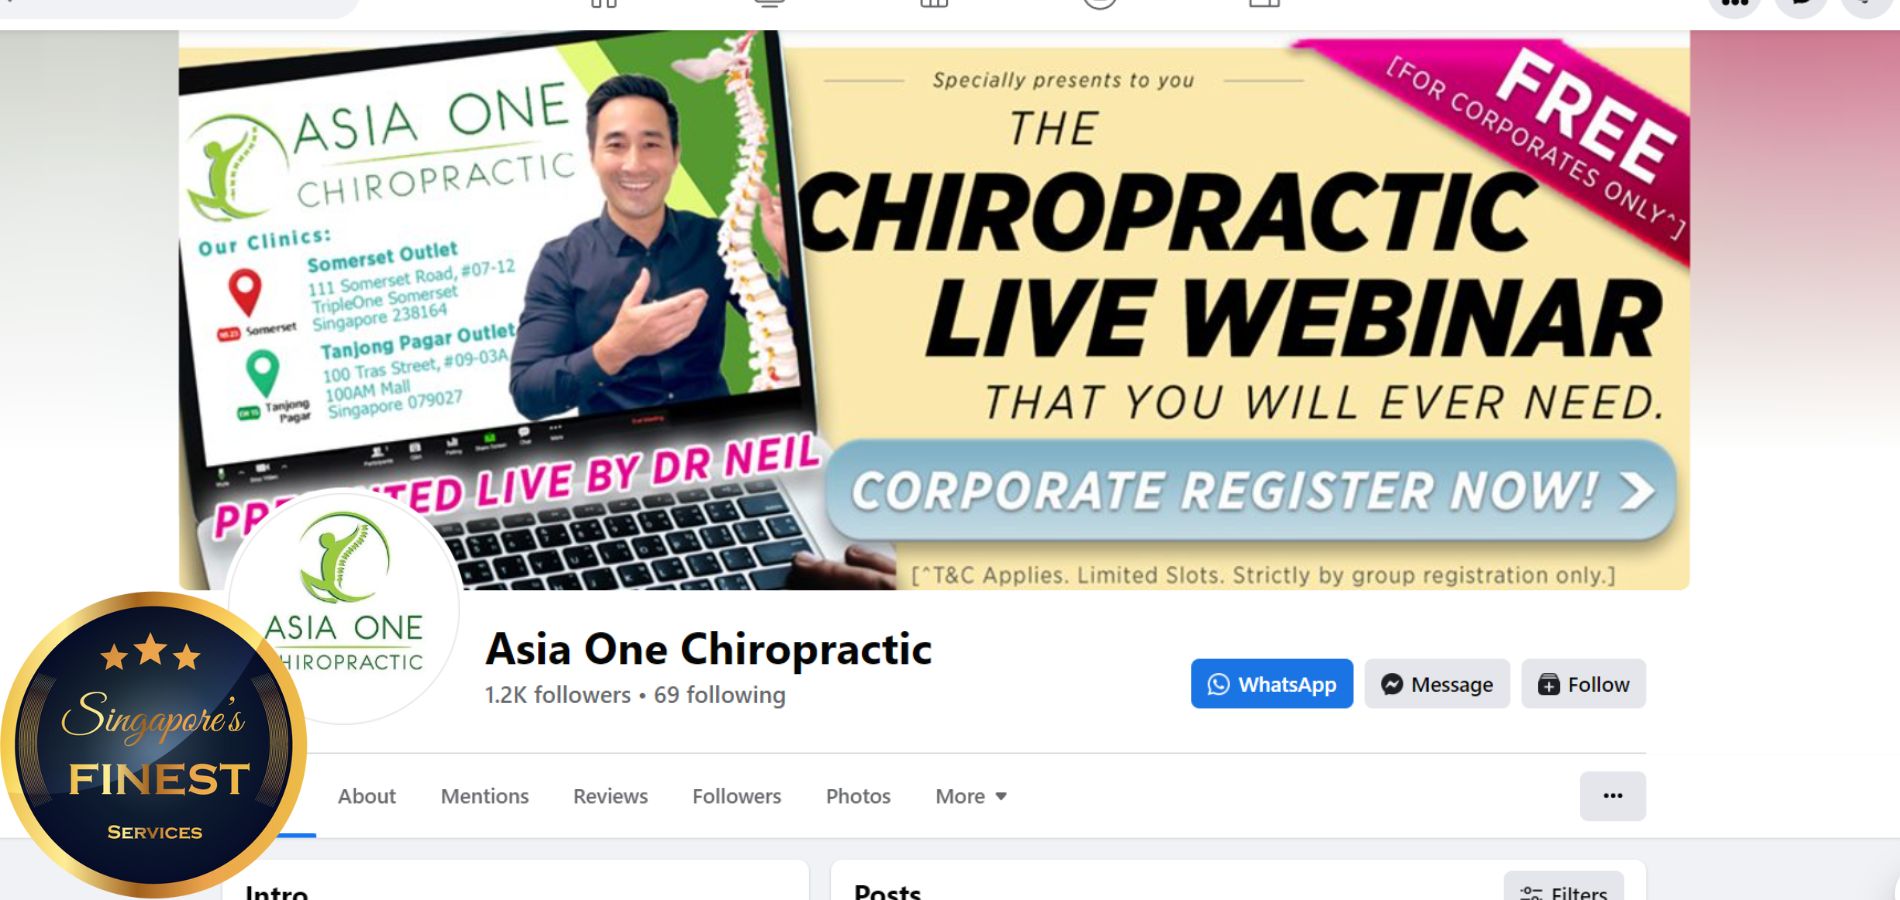 Asia One Chiropractic - Best Chiropractors in Singapore